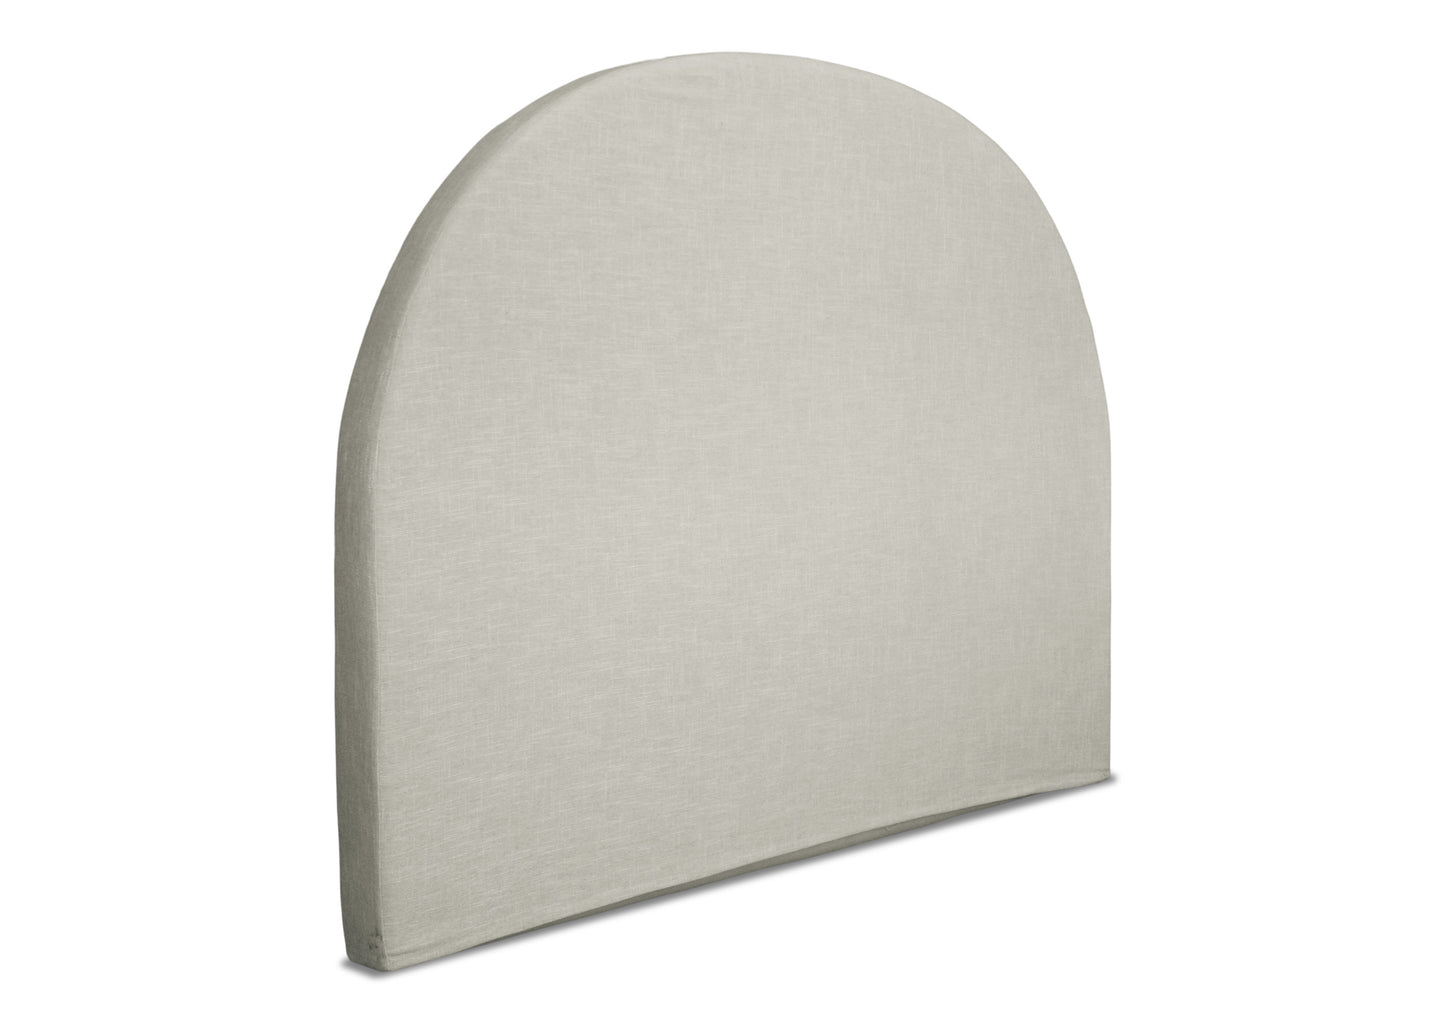 Arched Bedhead - Mist Grey